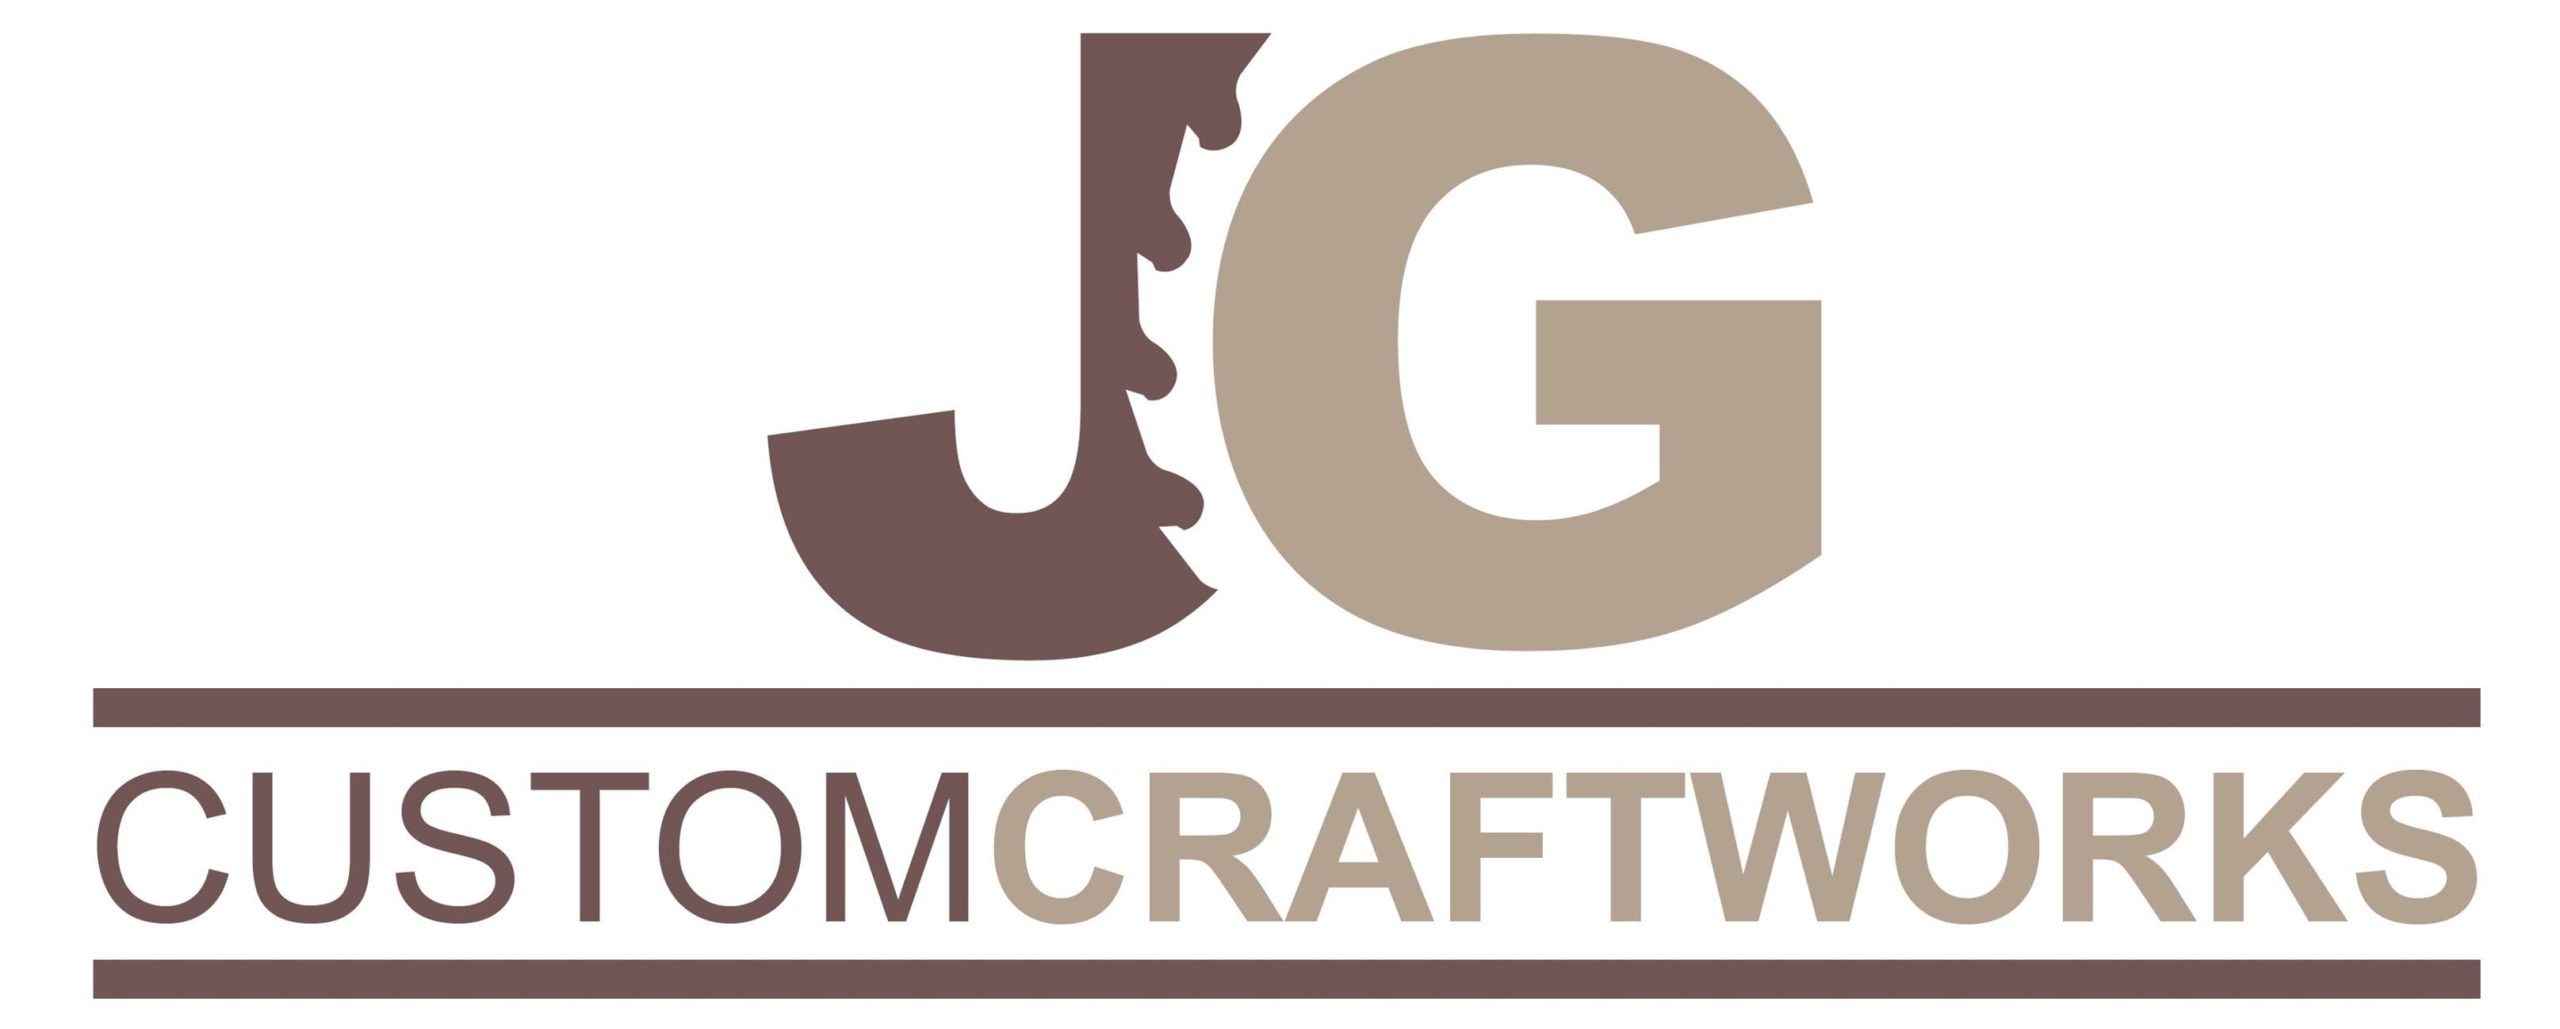 JG Custom Craftworks Logo